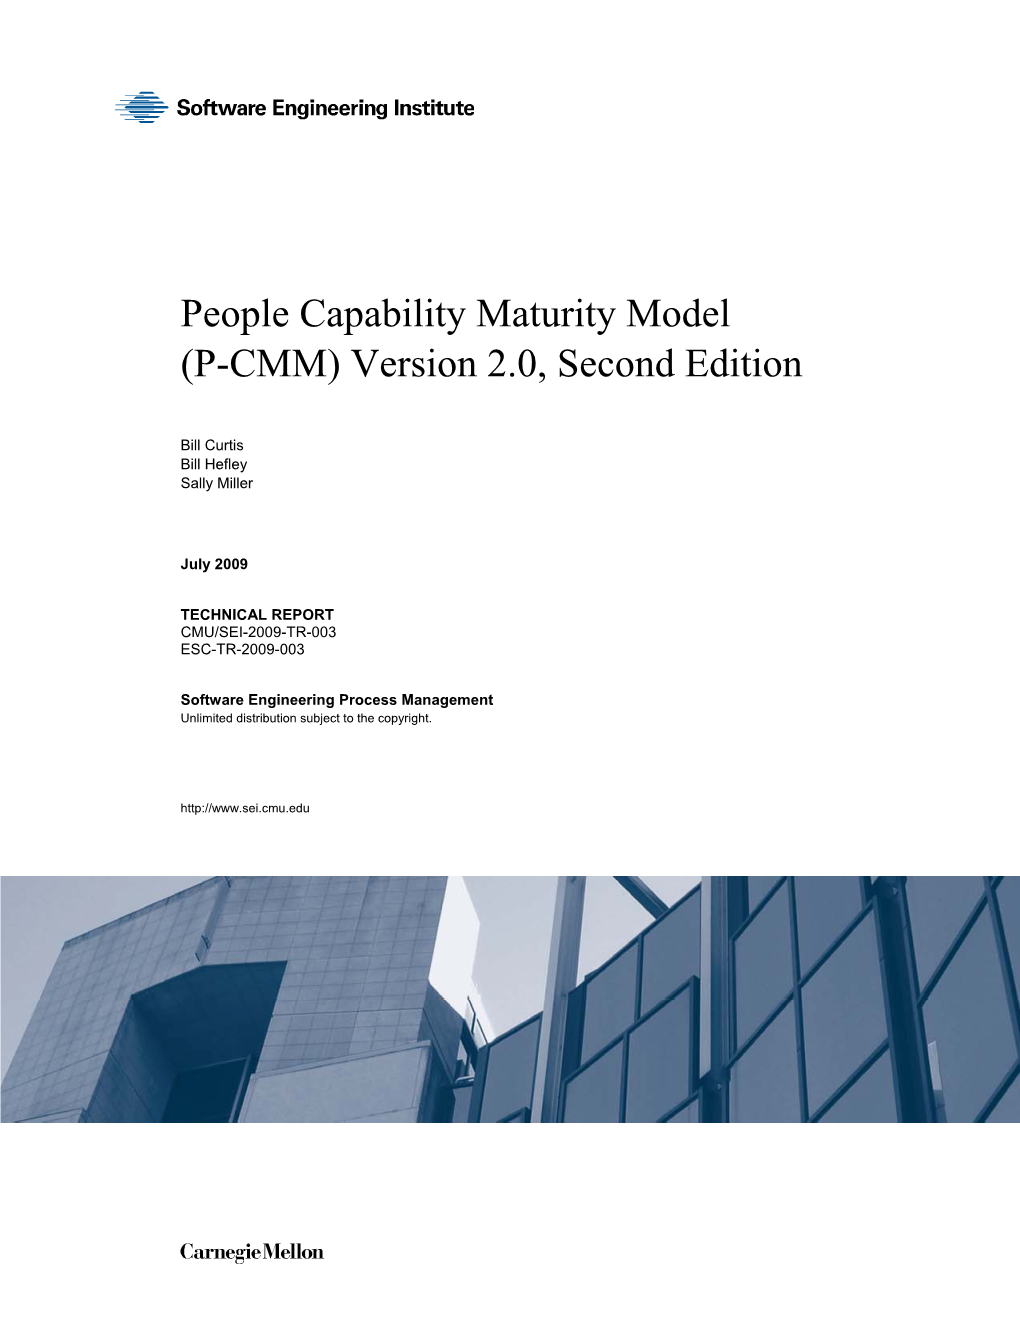 People Capability Maturity Model (P-CMM) Version 2.0, Second Edition